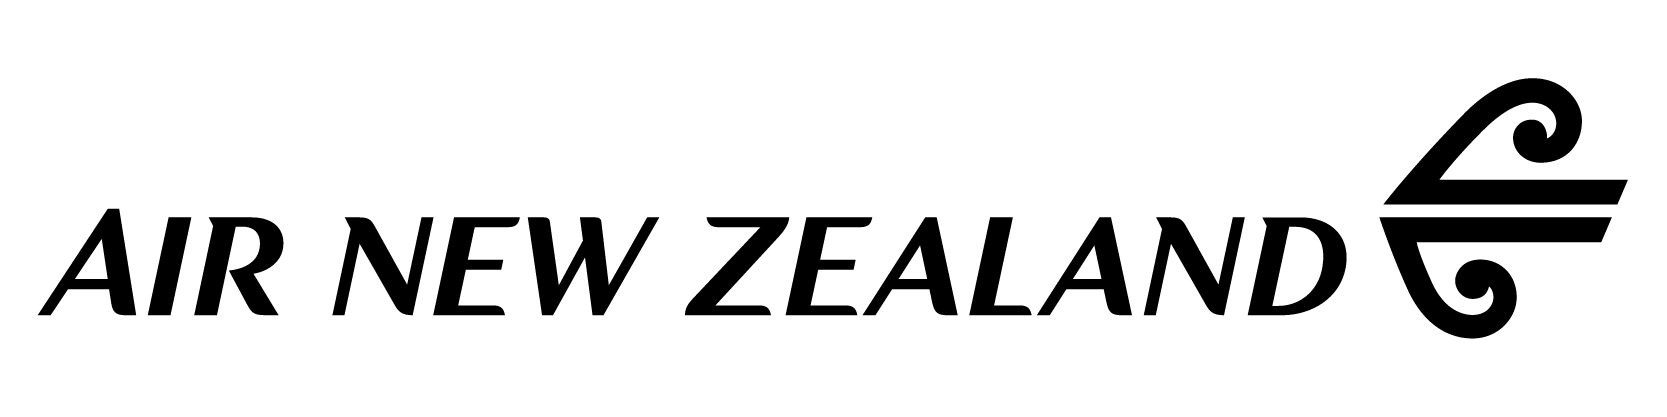 Air-New-Zealand